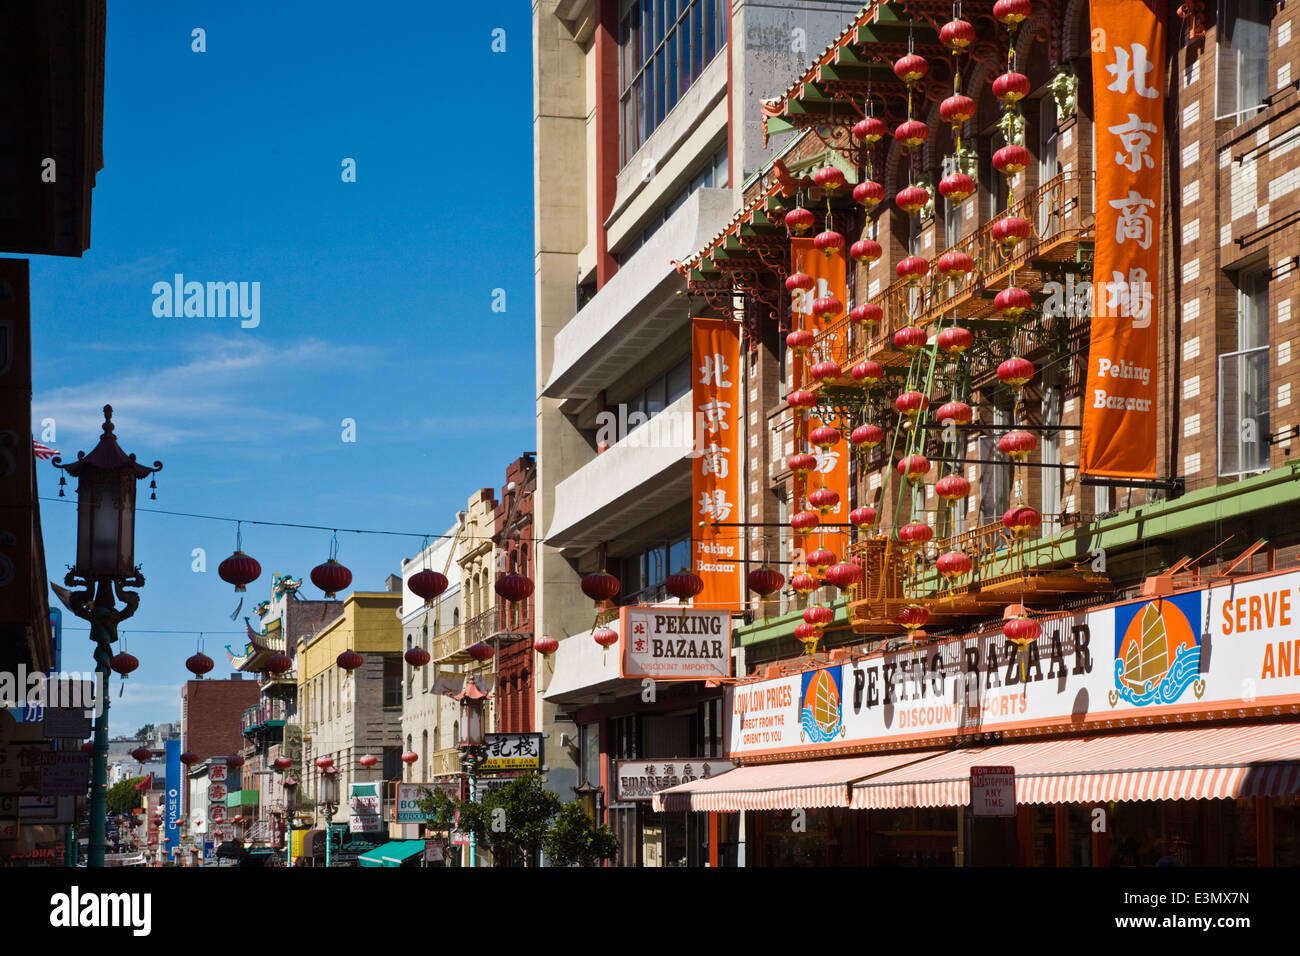 Insegne in cinese in una strada a China Town - SAN FRANCISCO, CALIFORNIA Foto Stock